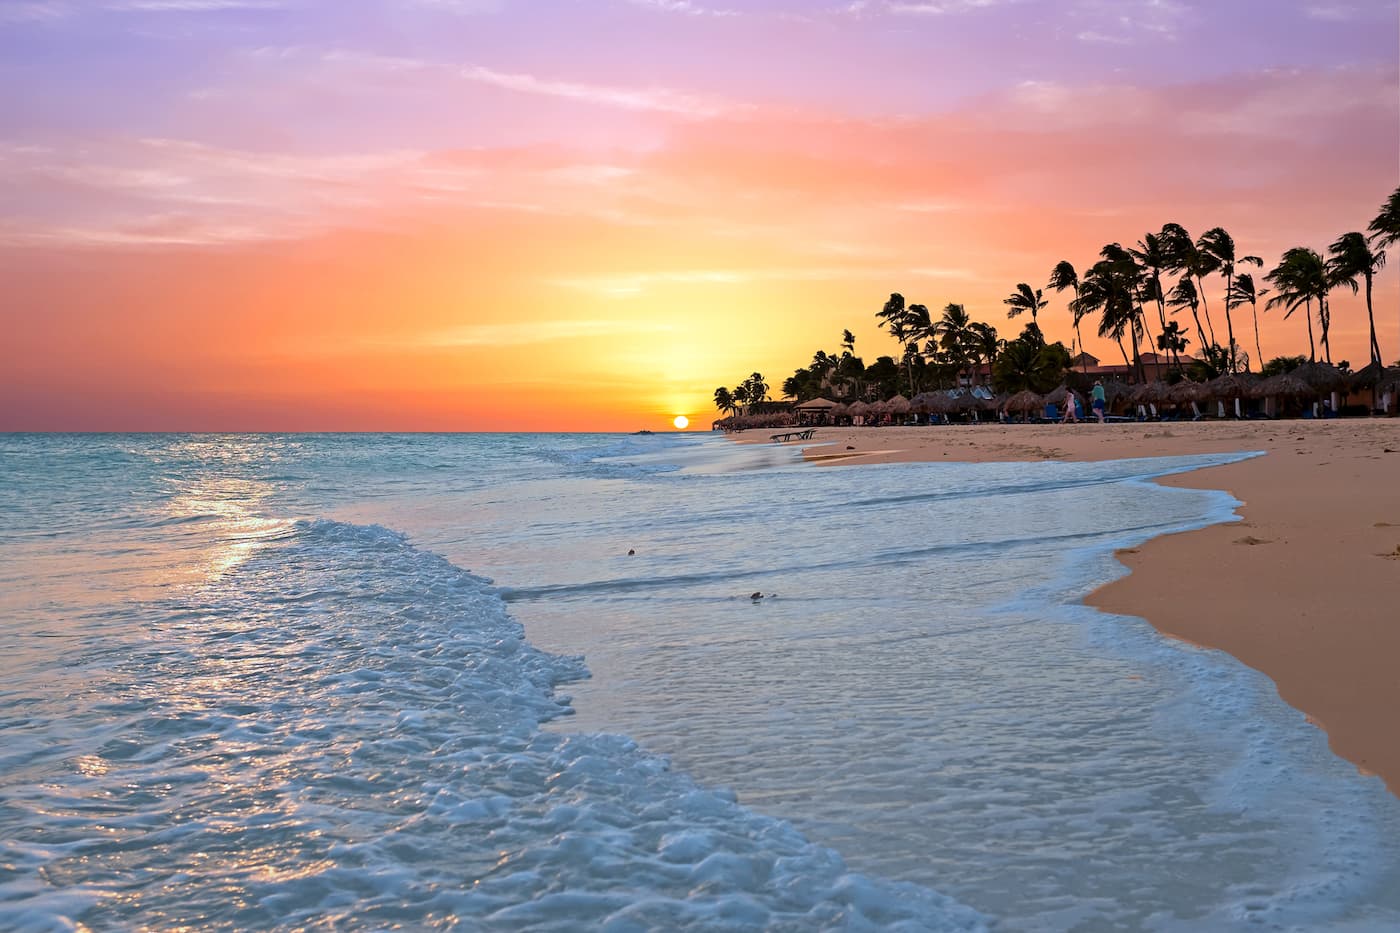 A gorgeous sunset at Druif Beach, Aruba, Dutch Caribbean.